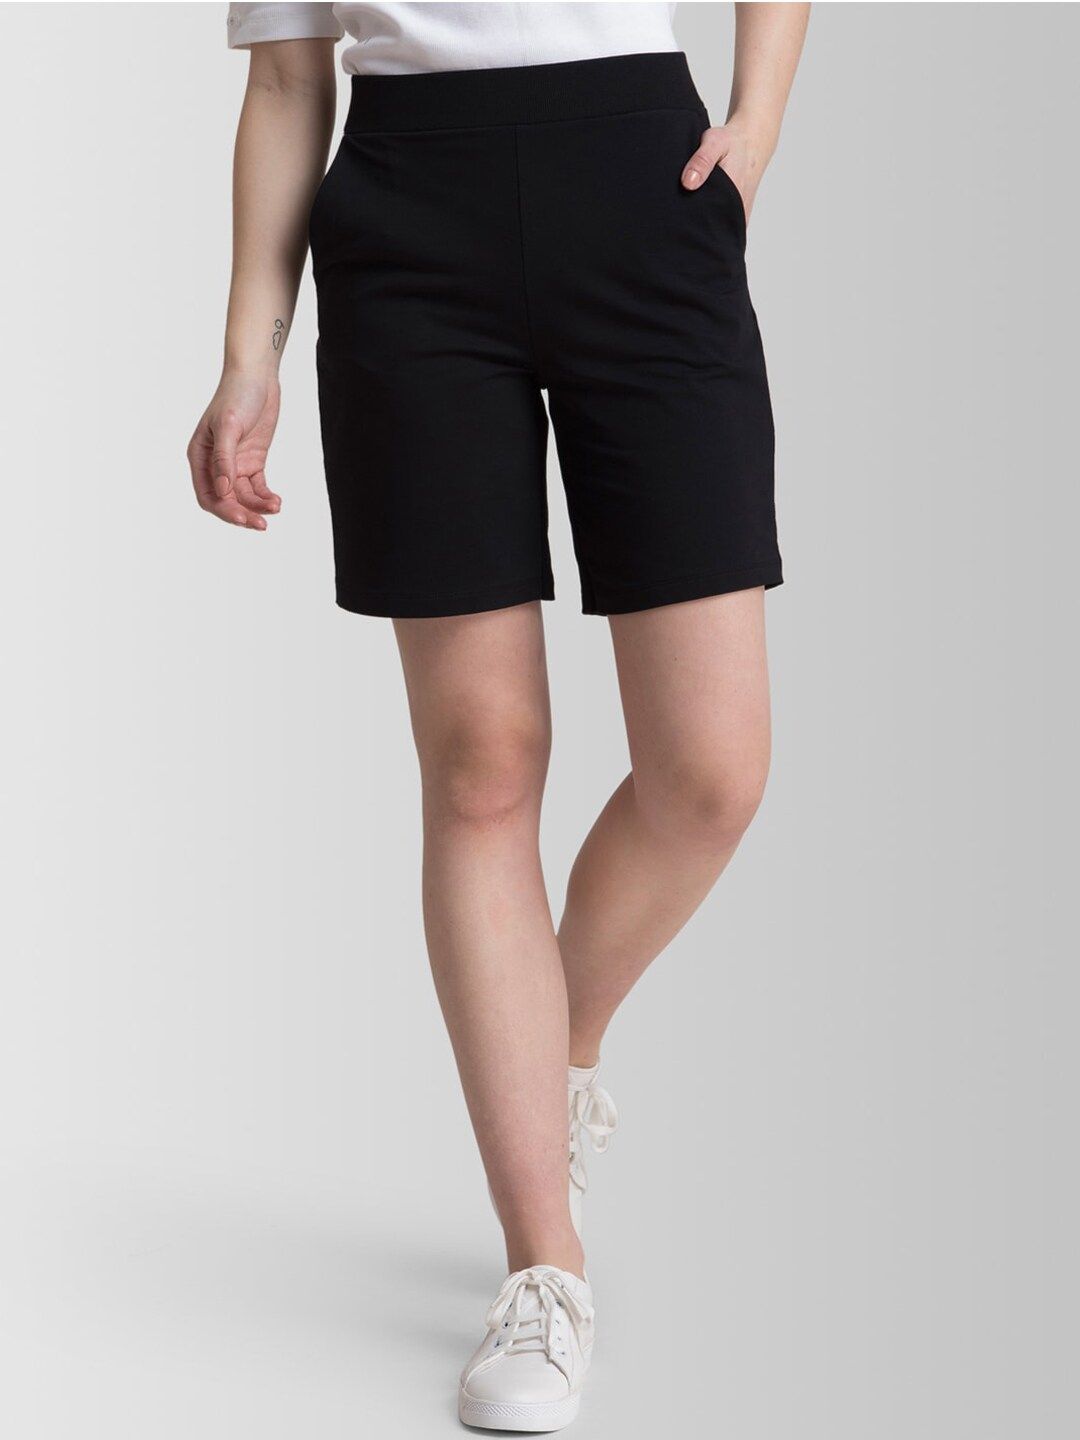 FableStreet Women LivIn Regular Fit Shorts Price in India